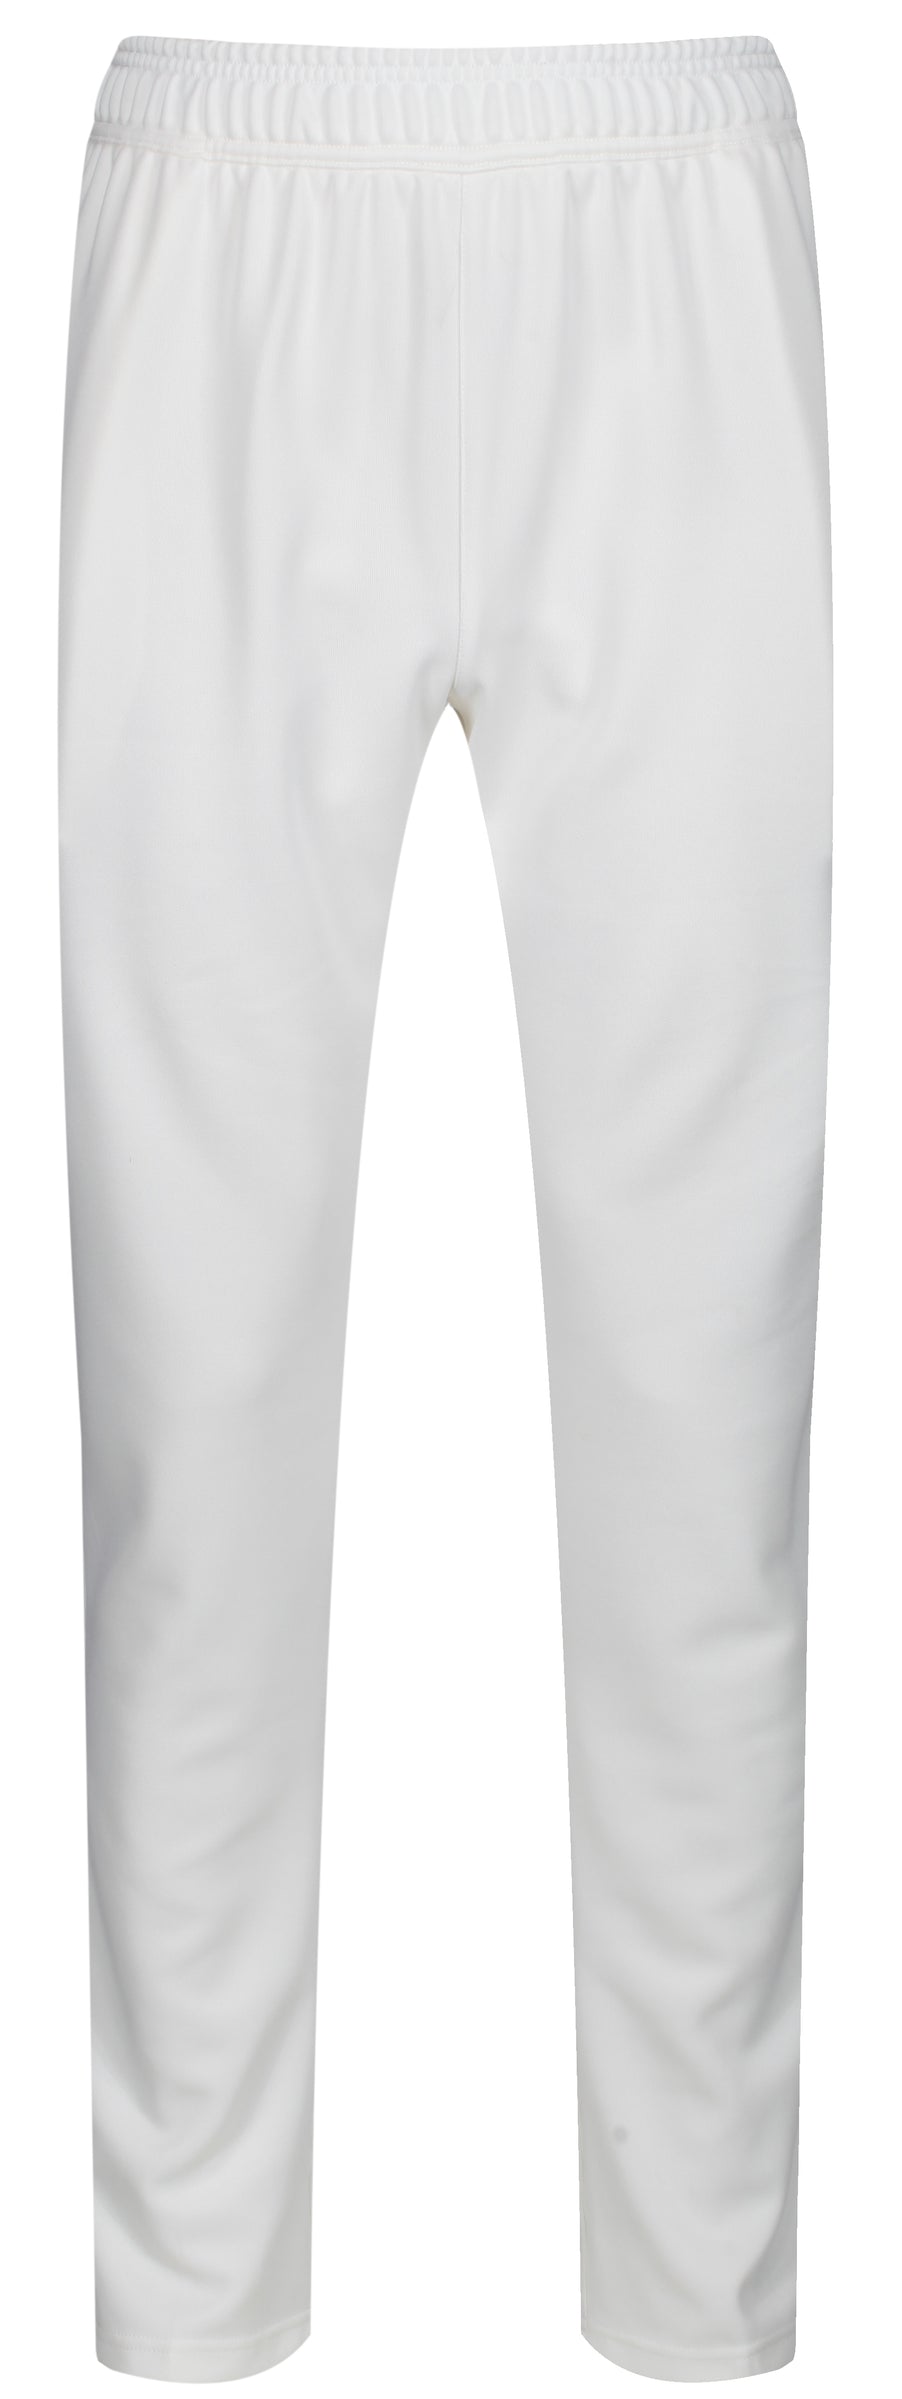 MBS Premium Cricket Trousers - Senior